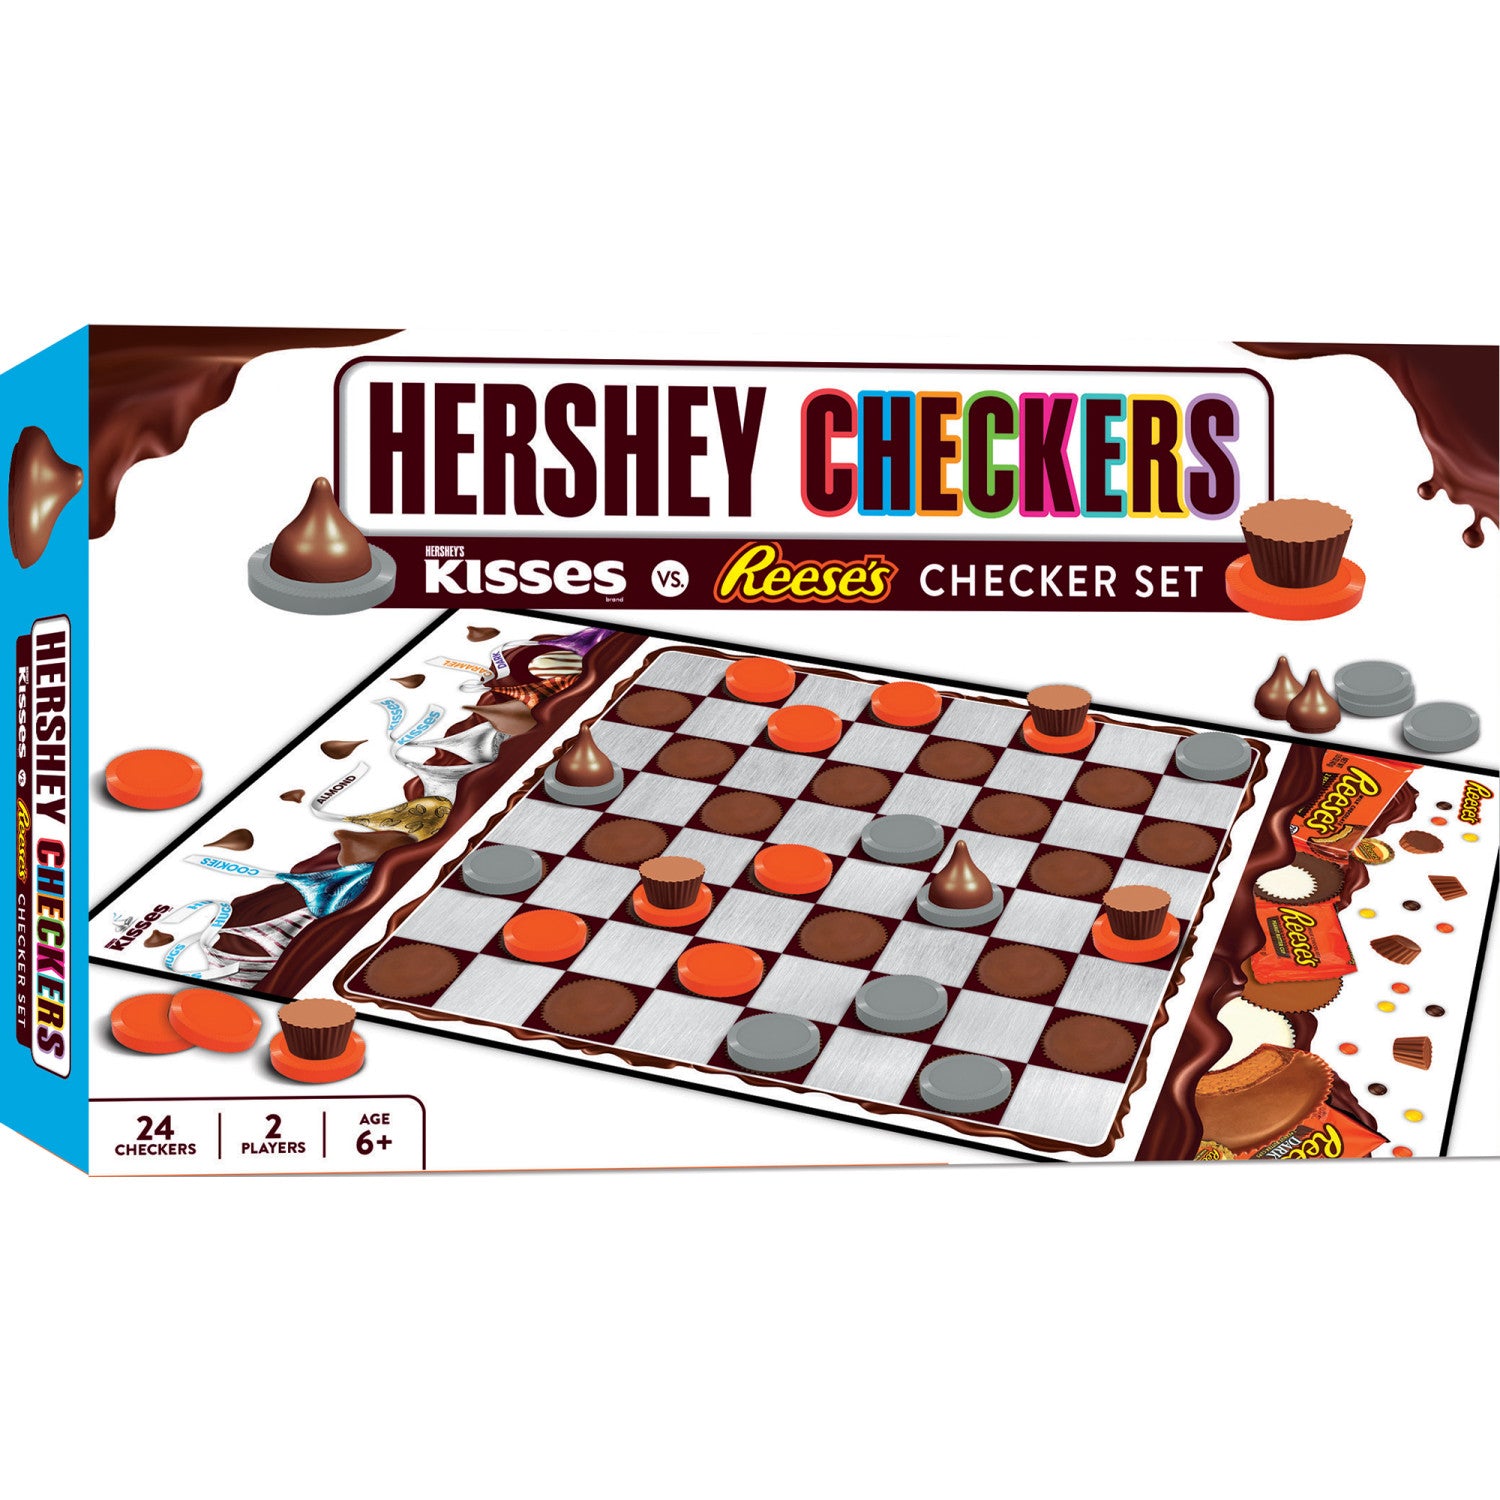 Hershey's Kisses vs Reese's Checkers